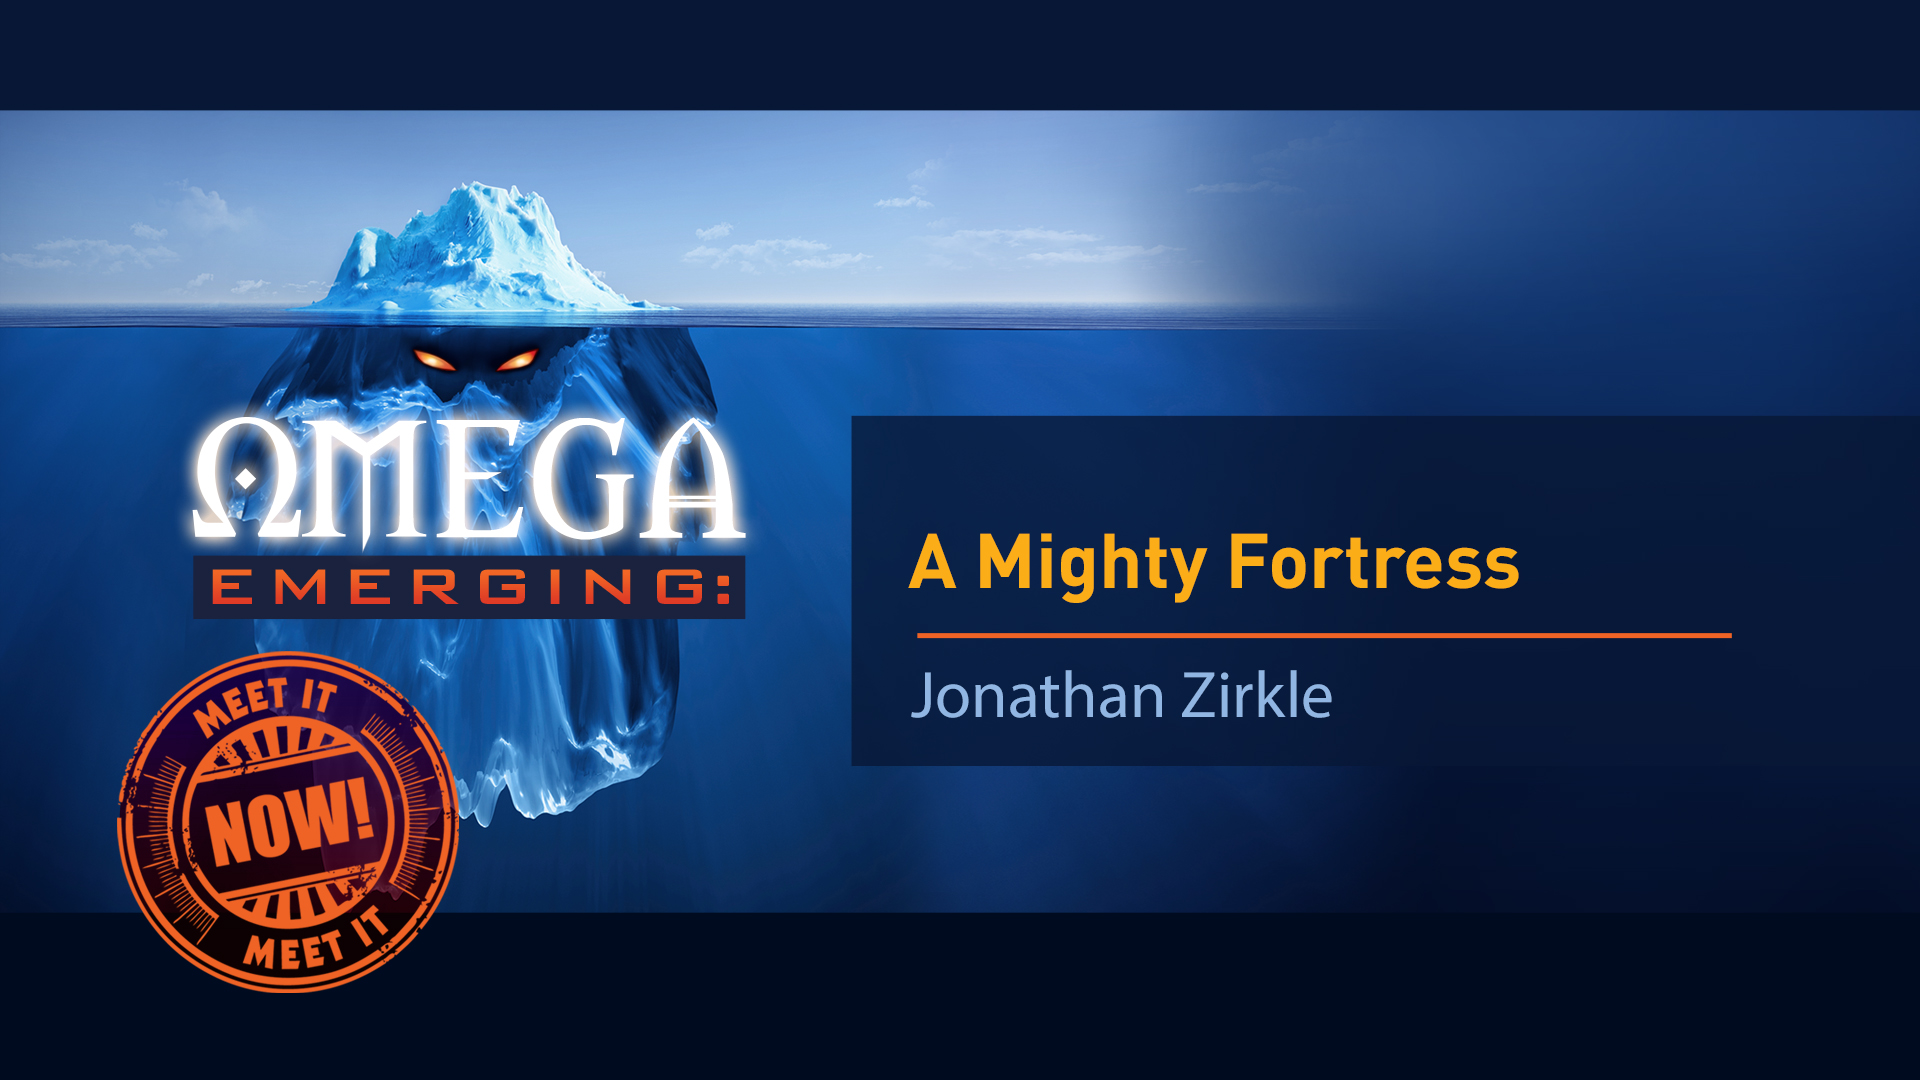 5. A Mighty Fortress - Jonathan Zirkle